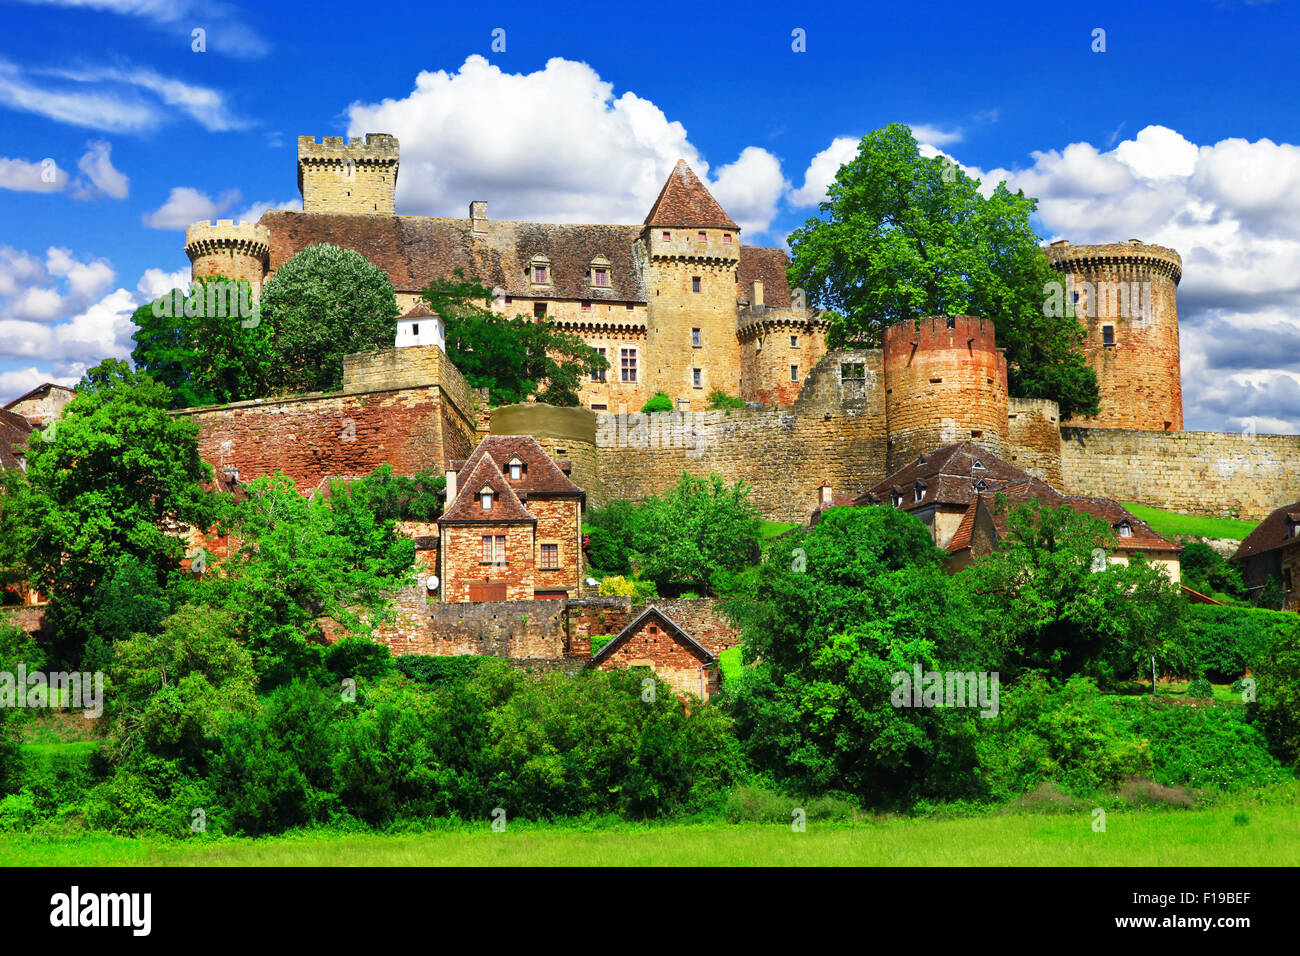 impressive medieval castle Castelnau in France (Prudhomat, Lot department) ,France. Stock Photo